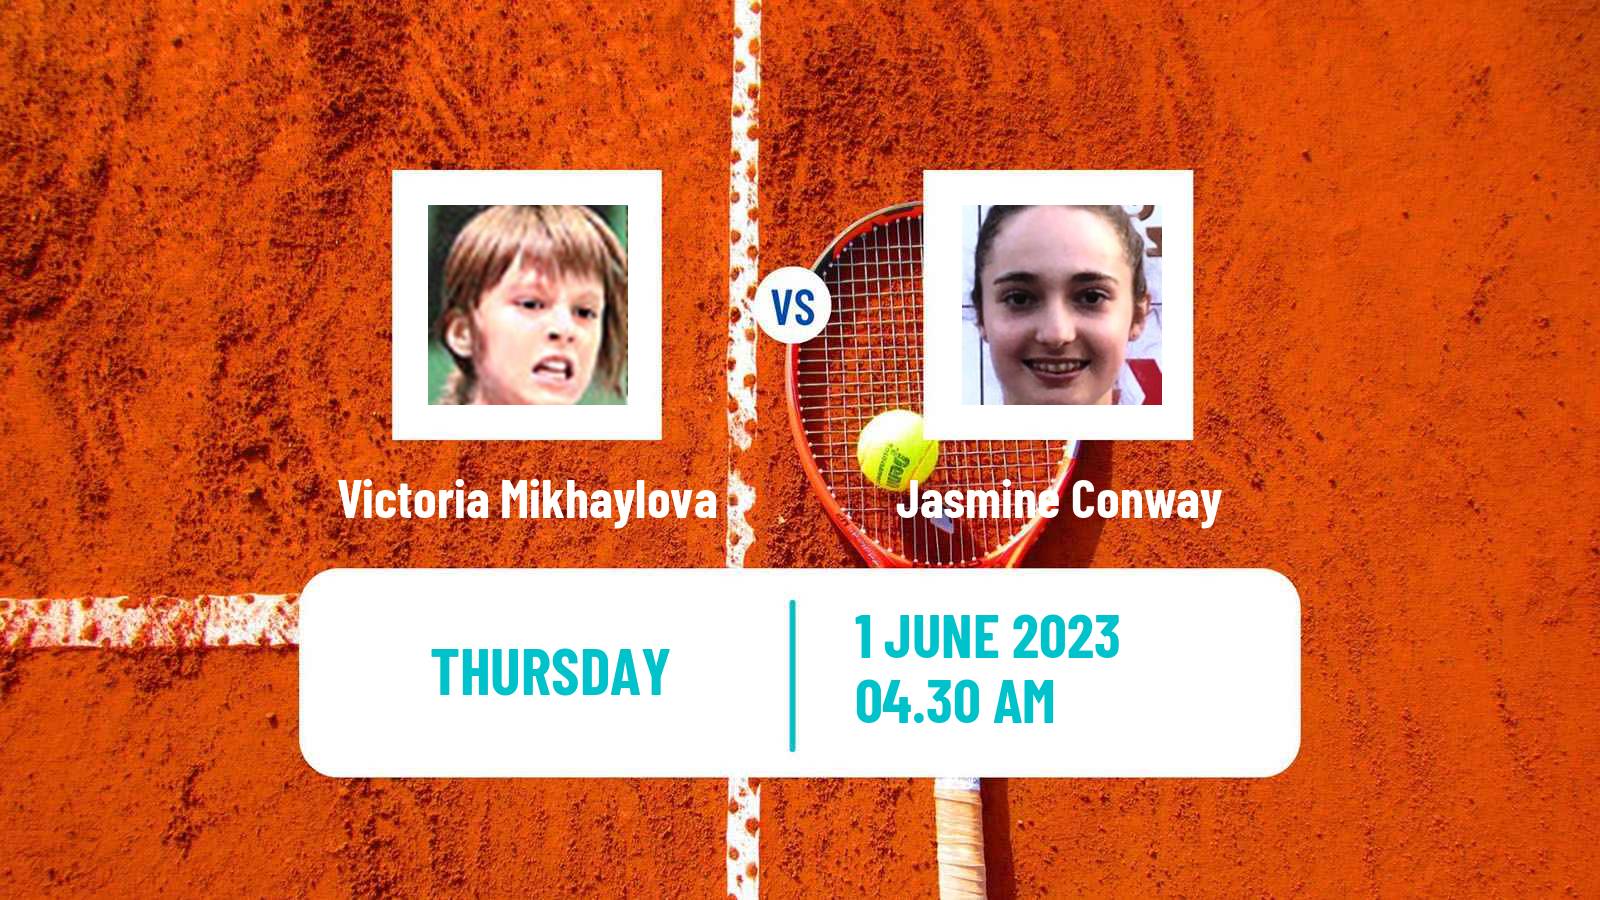 Tennis ITF W15 Monastir 17 Women Victoria Mikhaylova - Jasmine Conway